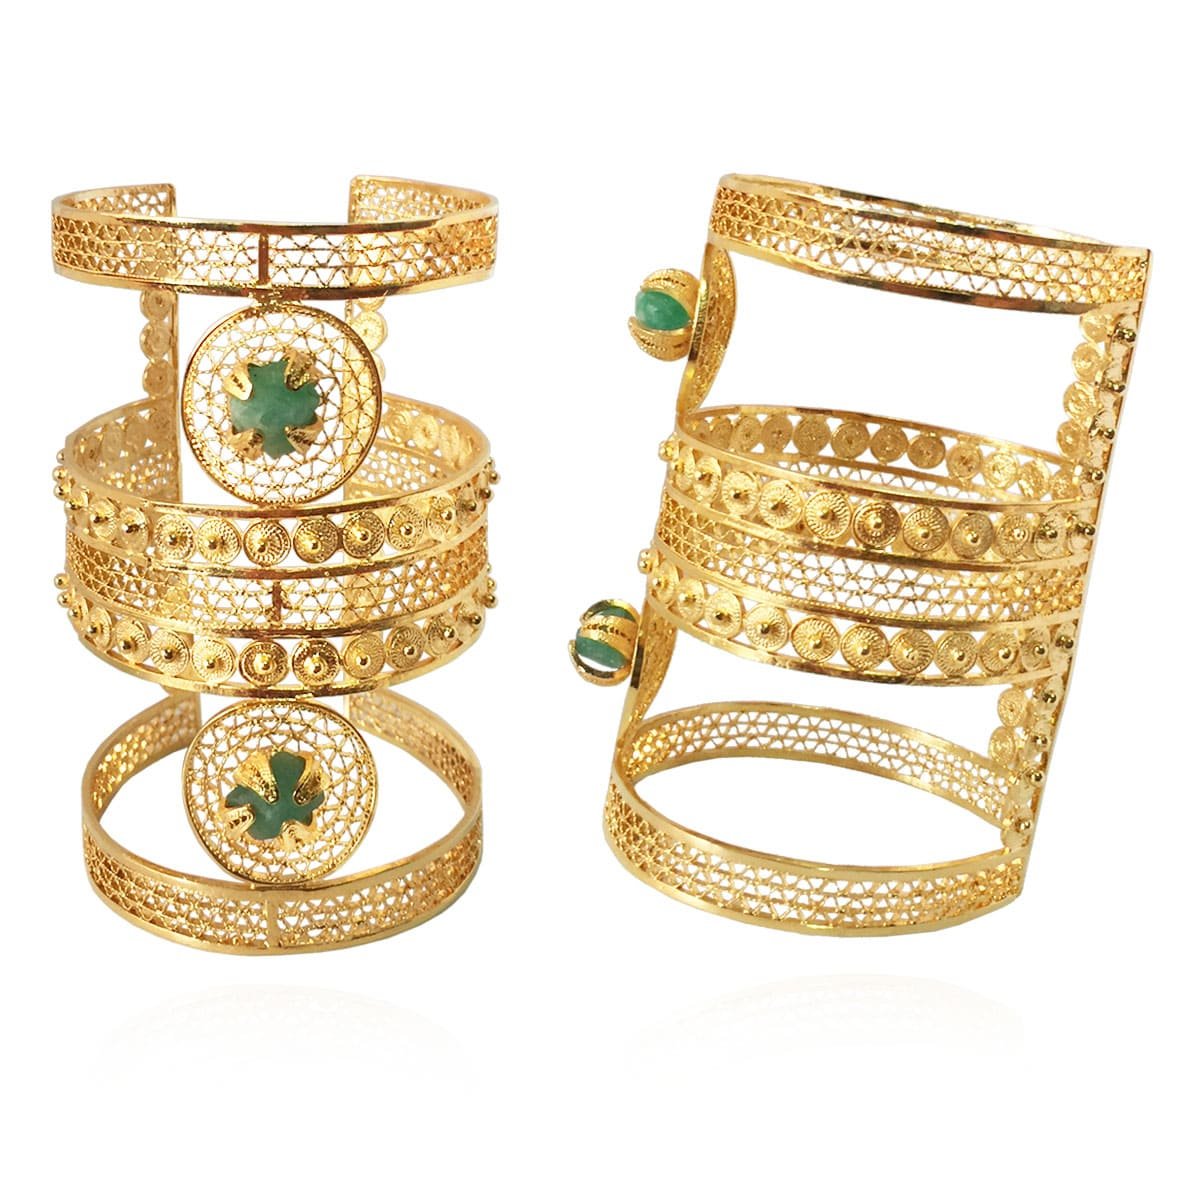 Ana Carolina Valencia Lace Maxi Bracelet in Gold with Emerald.jpg